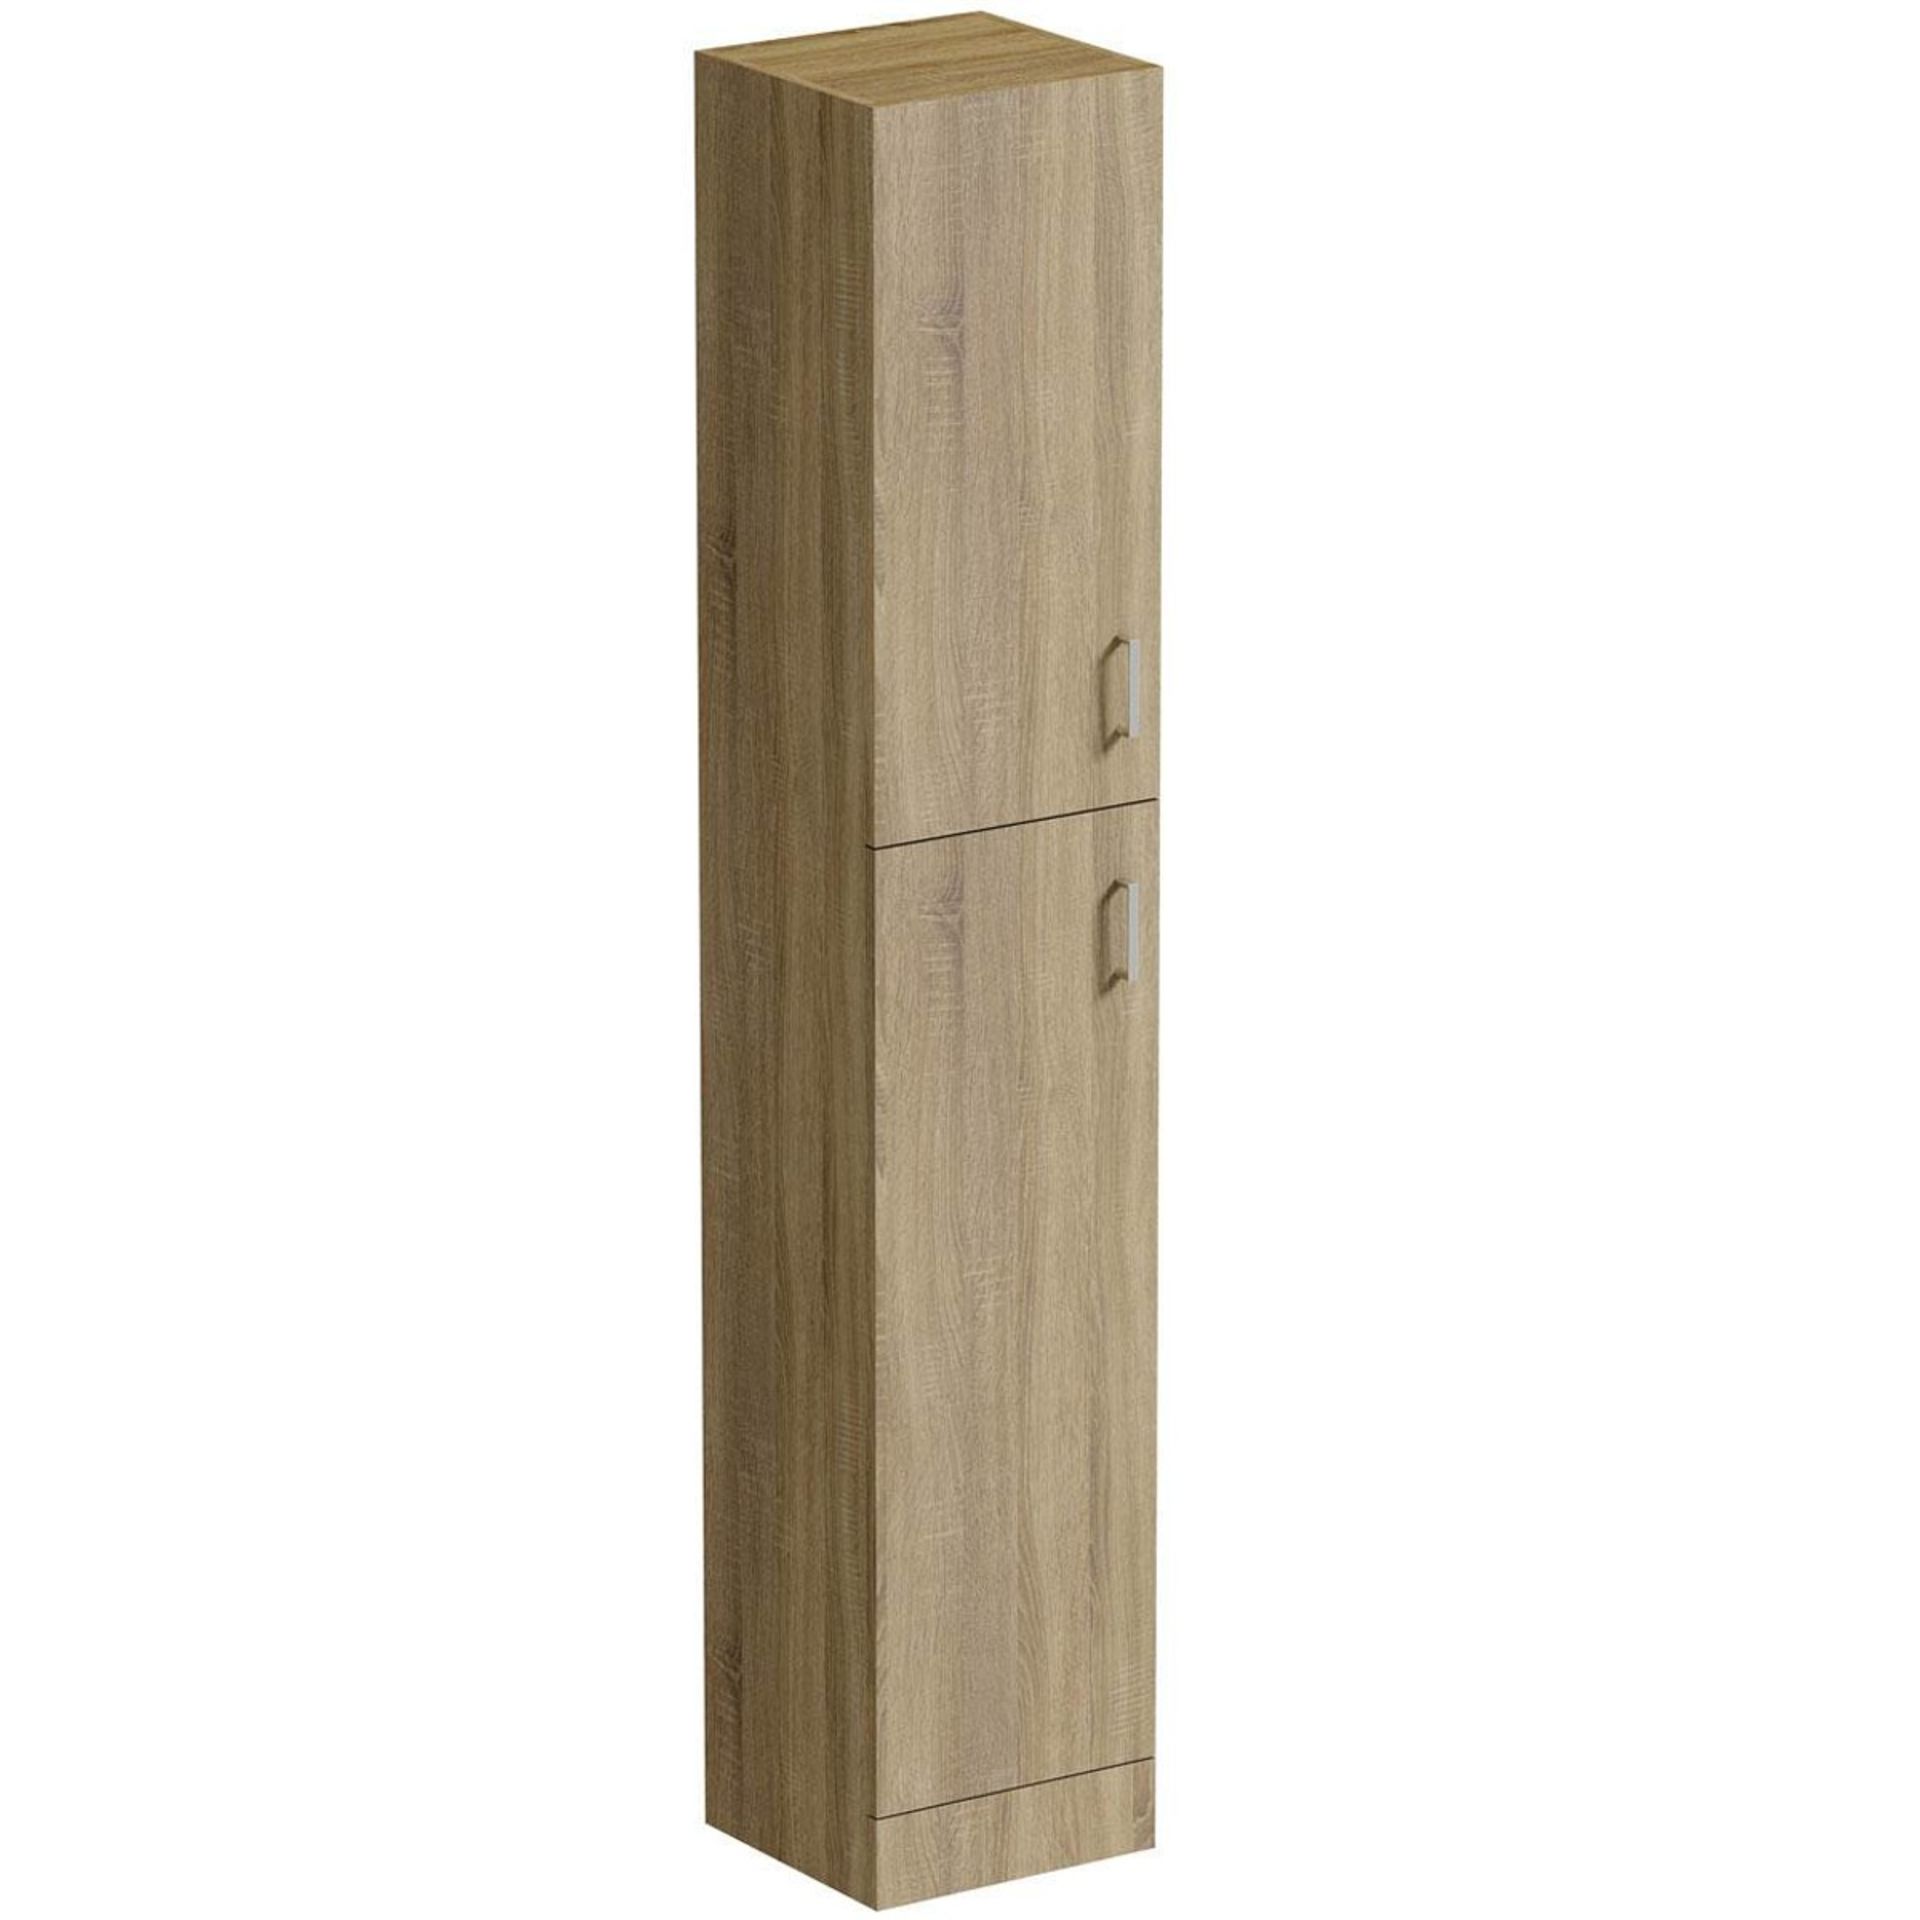 1 x Sienna Oak 300mm Tall Bathroom Storage Unit - Unused Stock - CL190 - Ref BR063 - Location: - Image 3 of 5